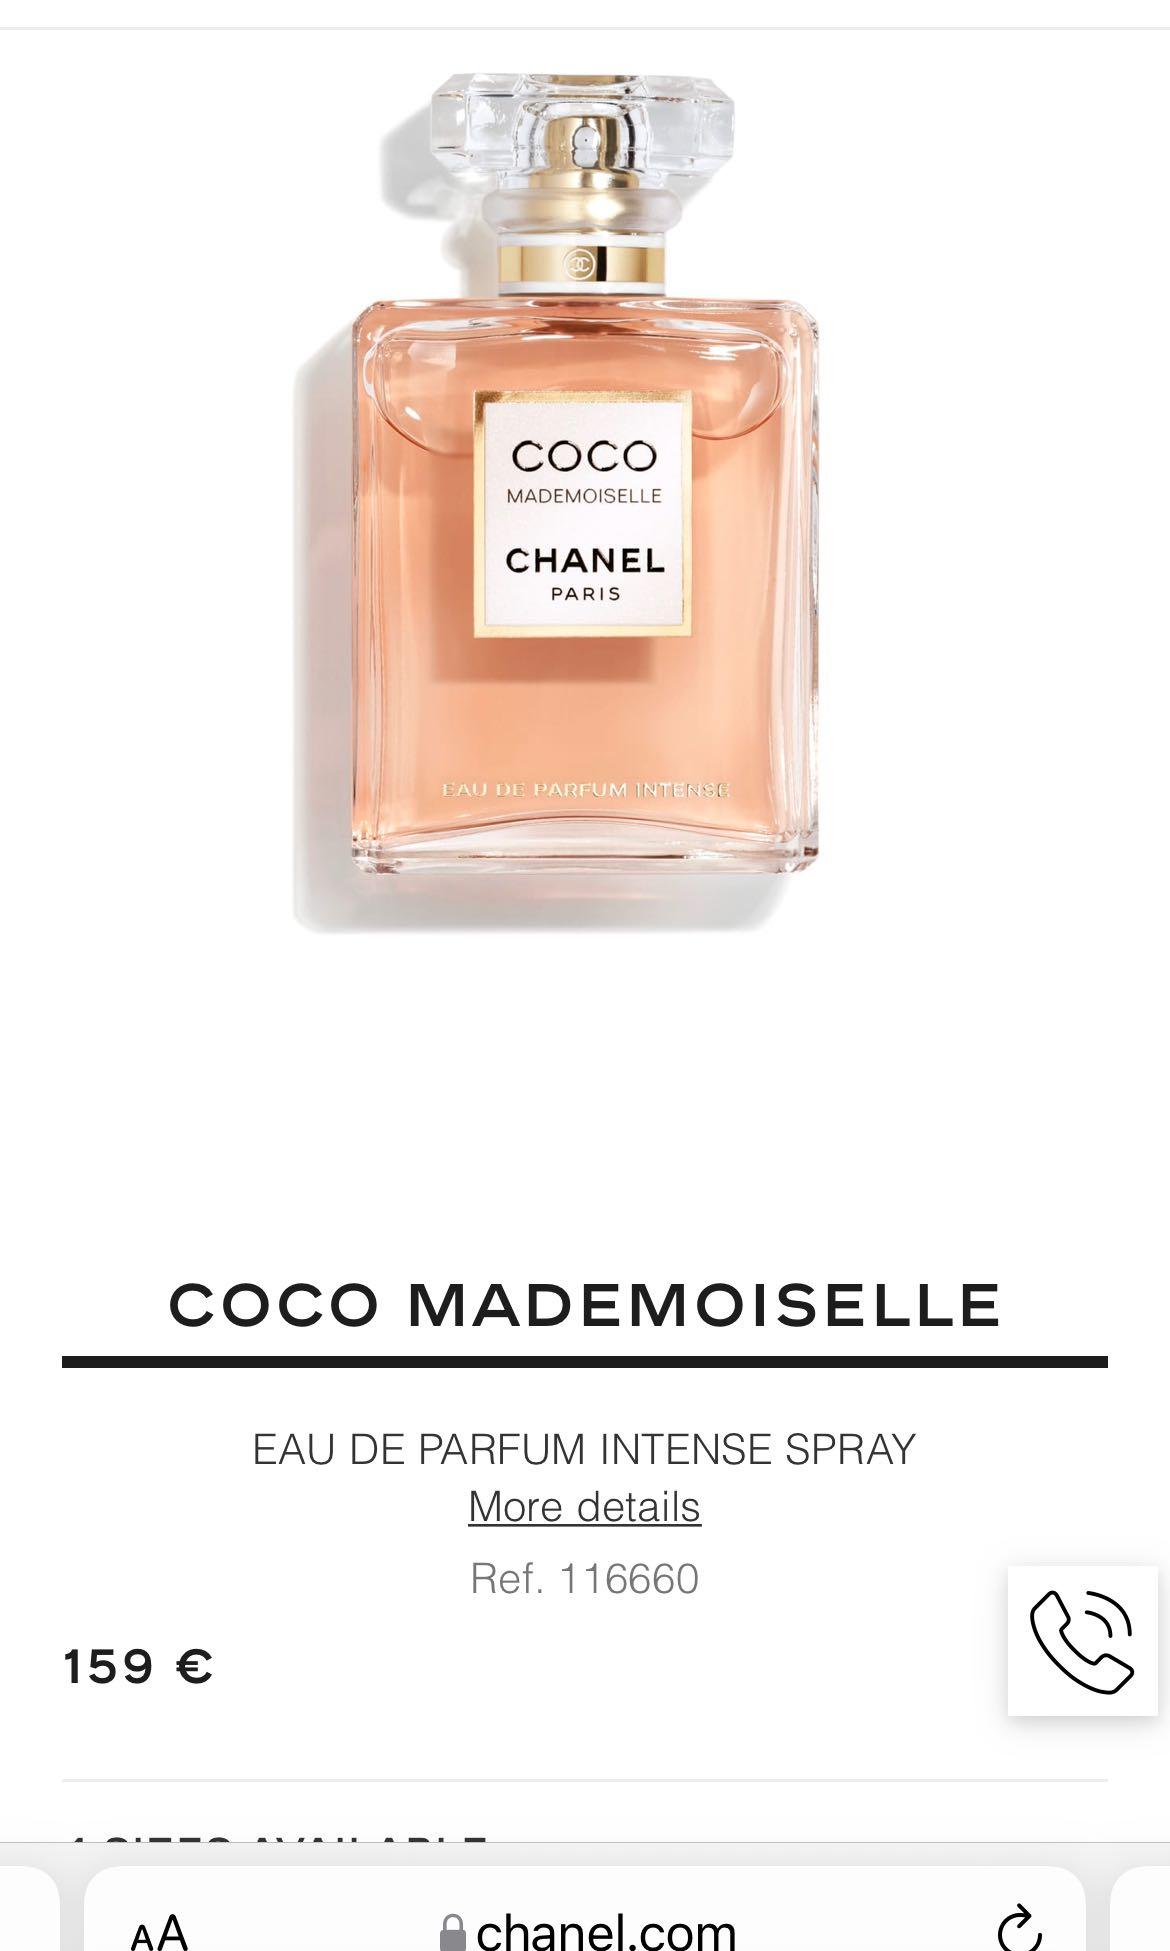 Chanel Coco Mademoiselle Eau De Parfum Intense Spray Ltd. Ed. Holiday Gift  Box, Beauty & Personal Care, Bath & Body, Body Care on Carousell